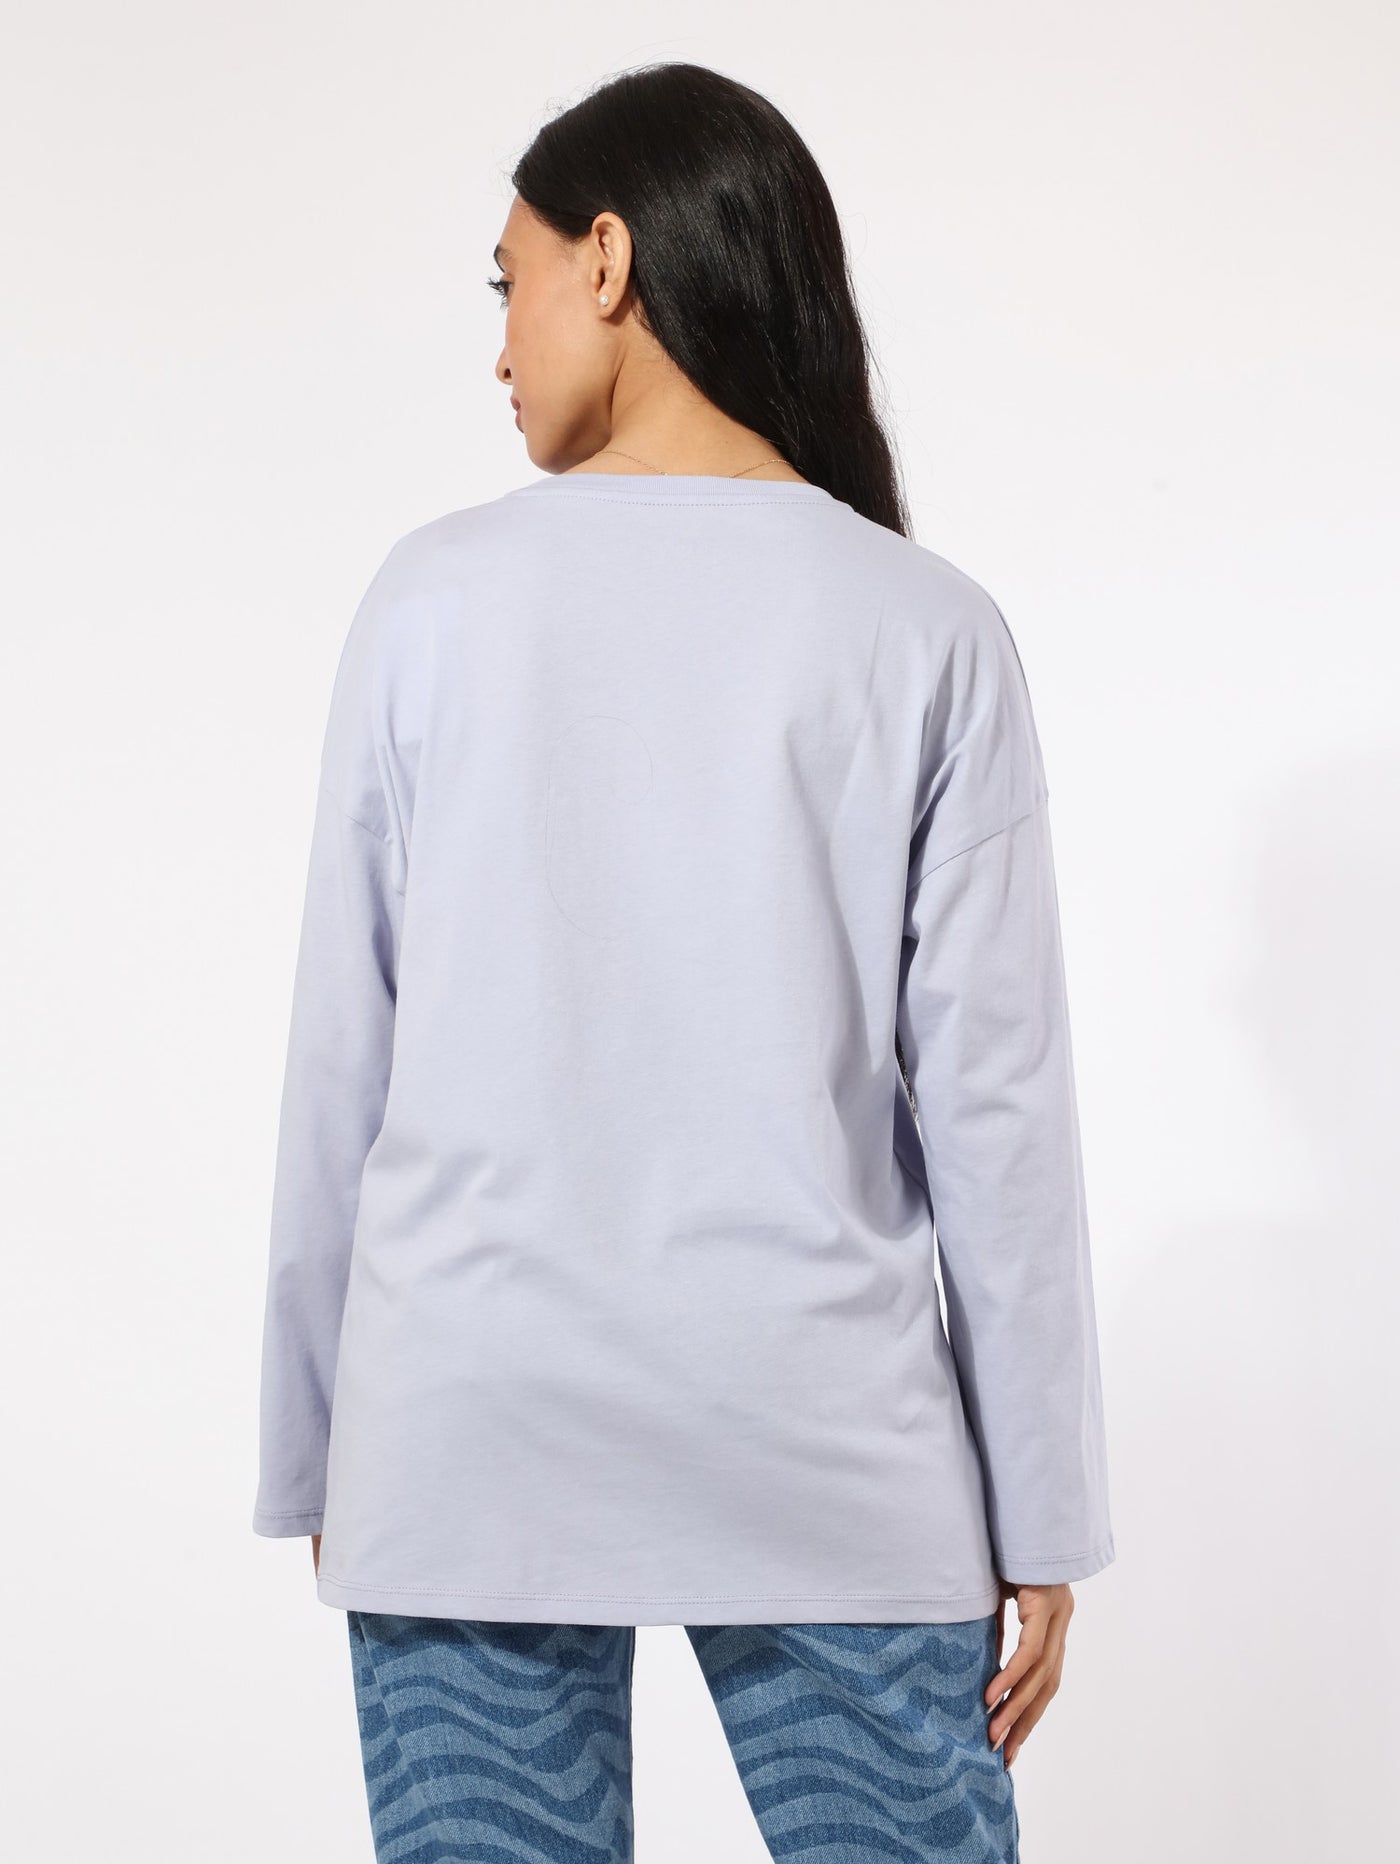 T-Shirt - Long Sleeves - Front Print